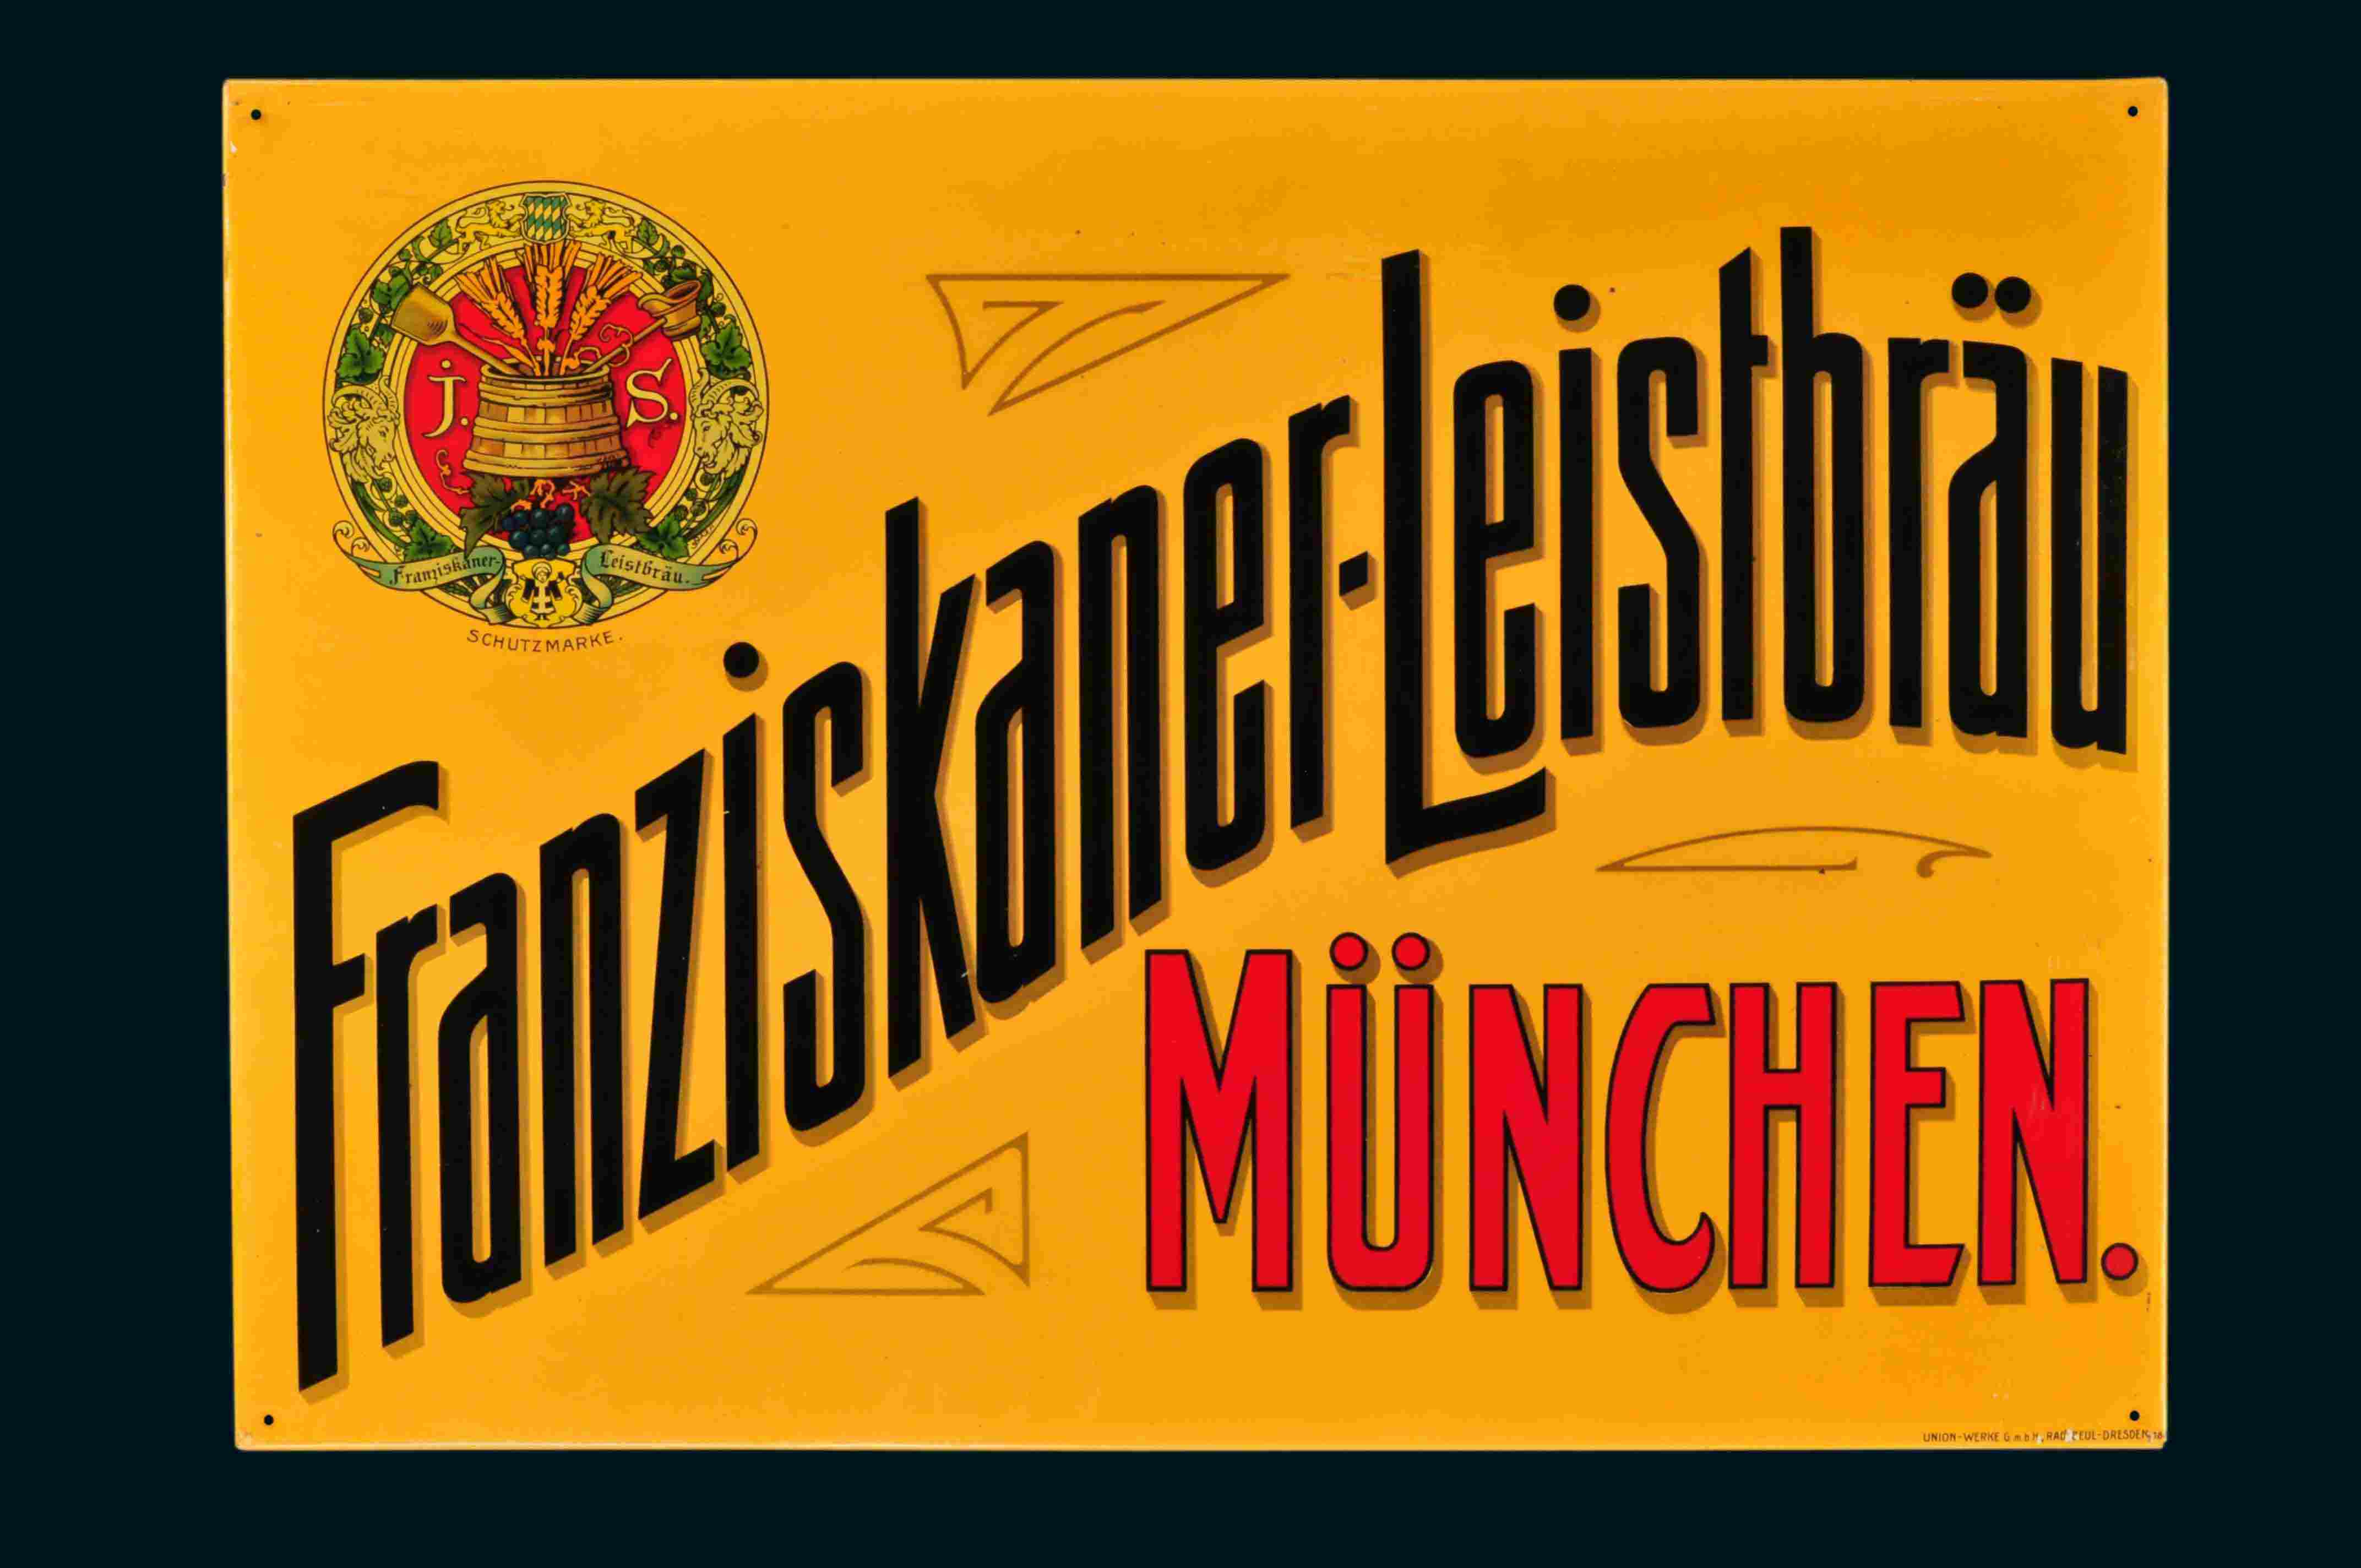 Franziskaner-Leistbräu 